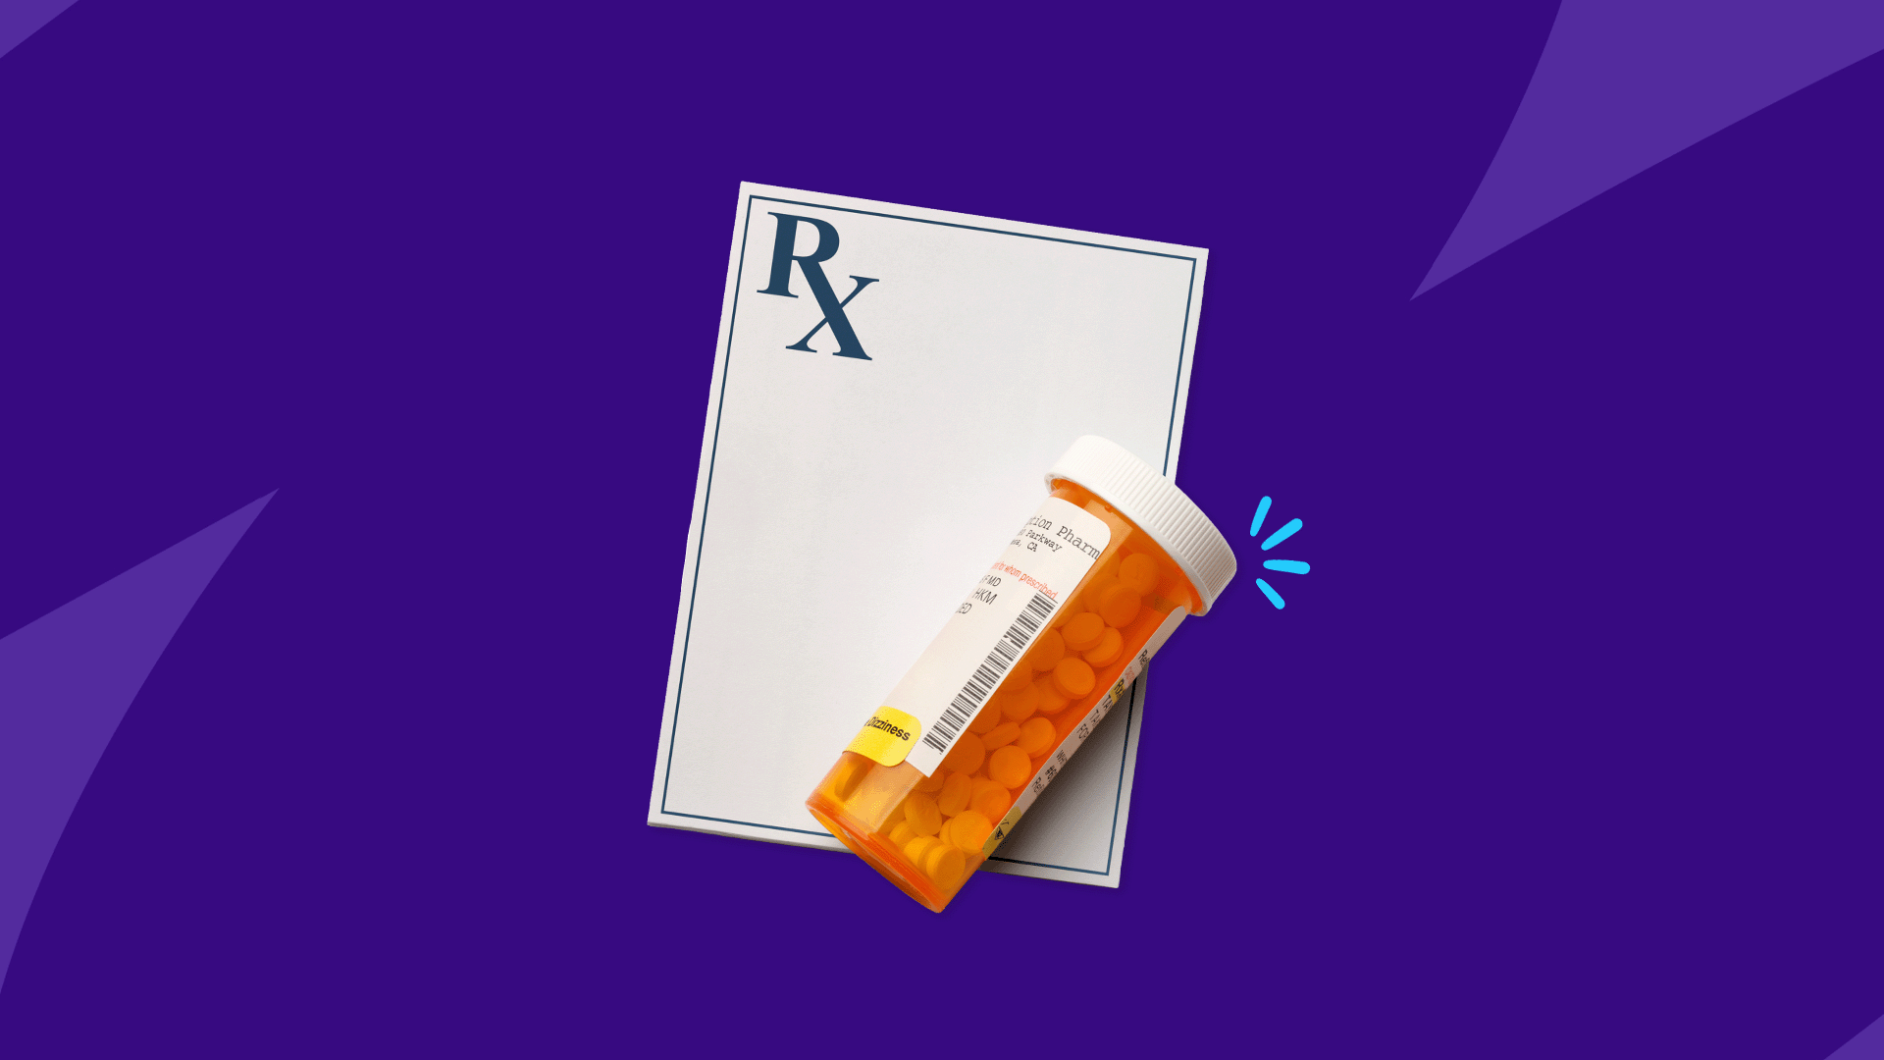 Rx pill bottle and prescription pad: Abilify generic